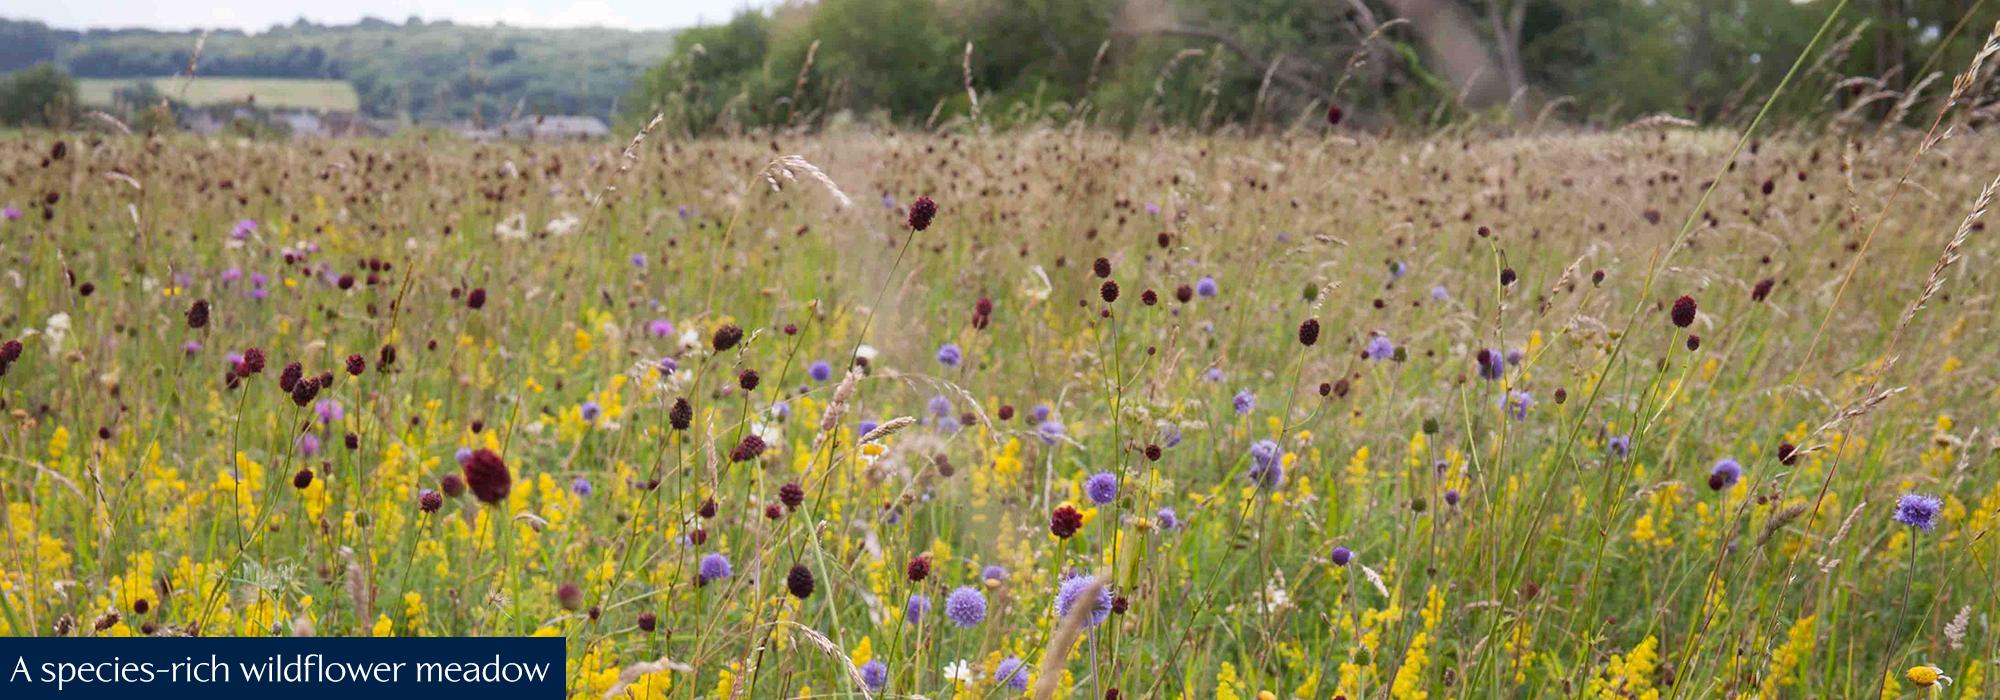 A species-rich wildflower meadow